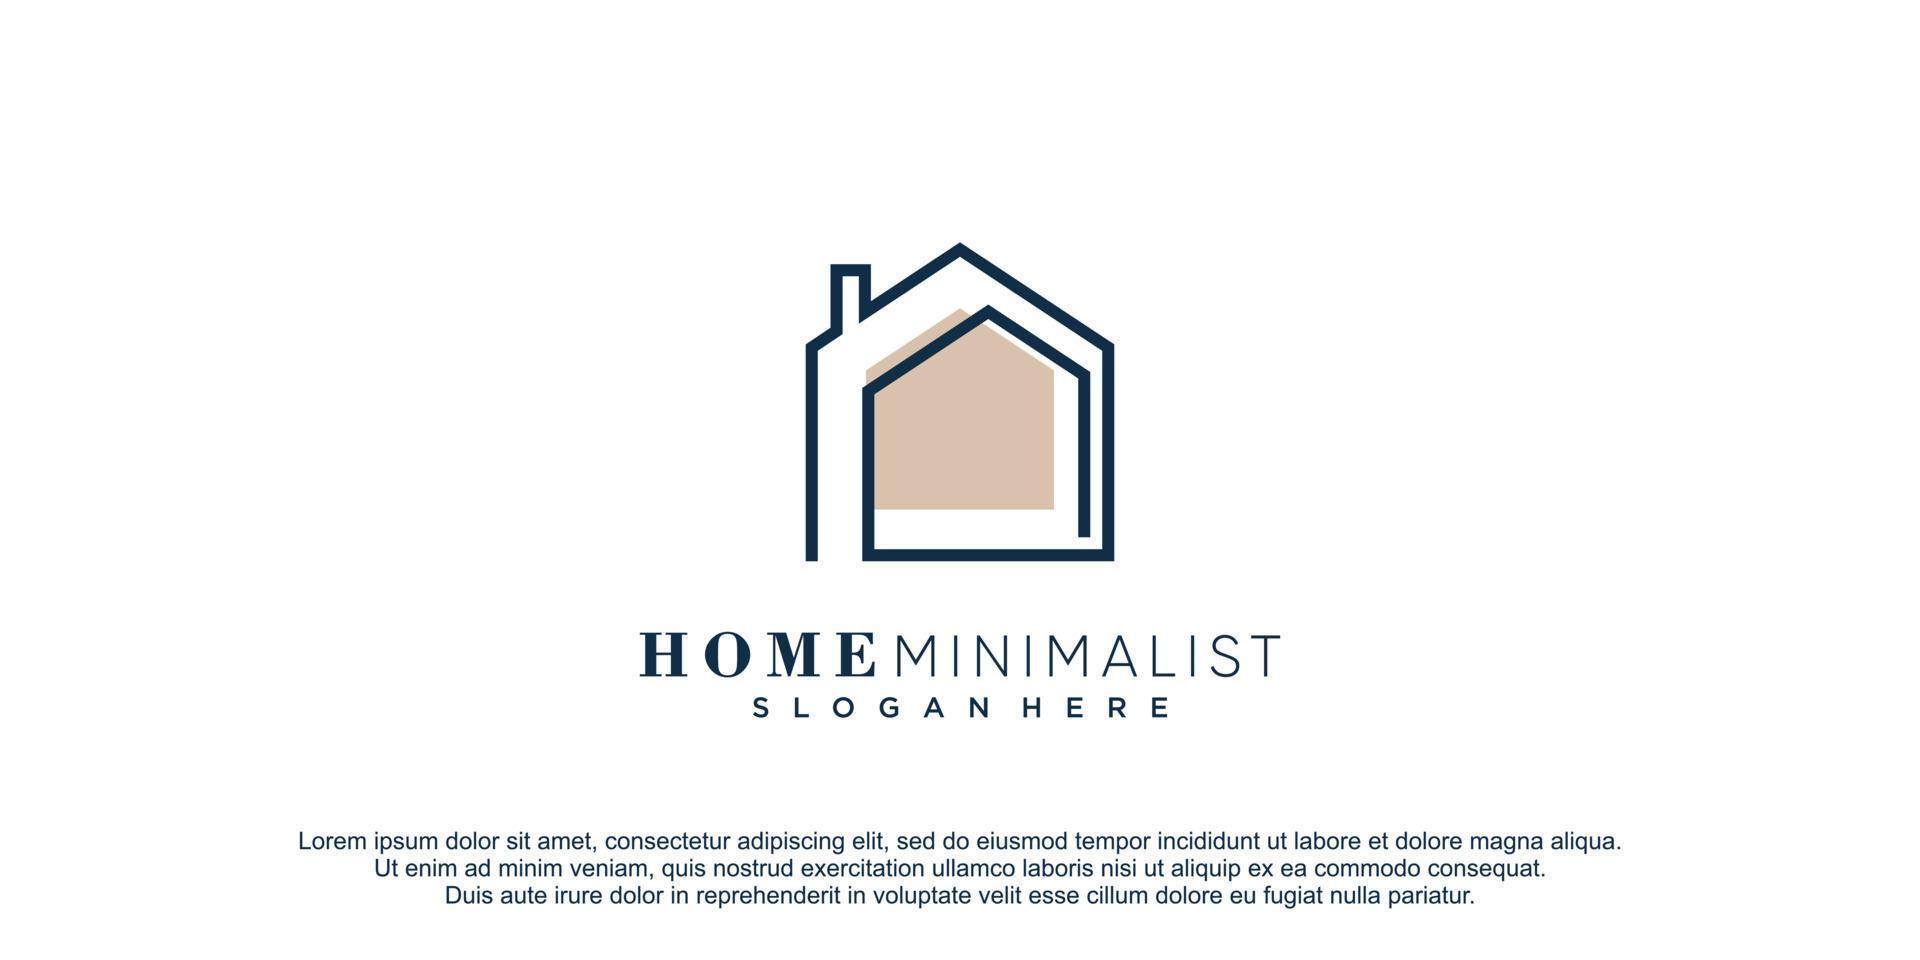 Home minimalist logo with creative lineart design icon vector illustration